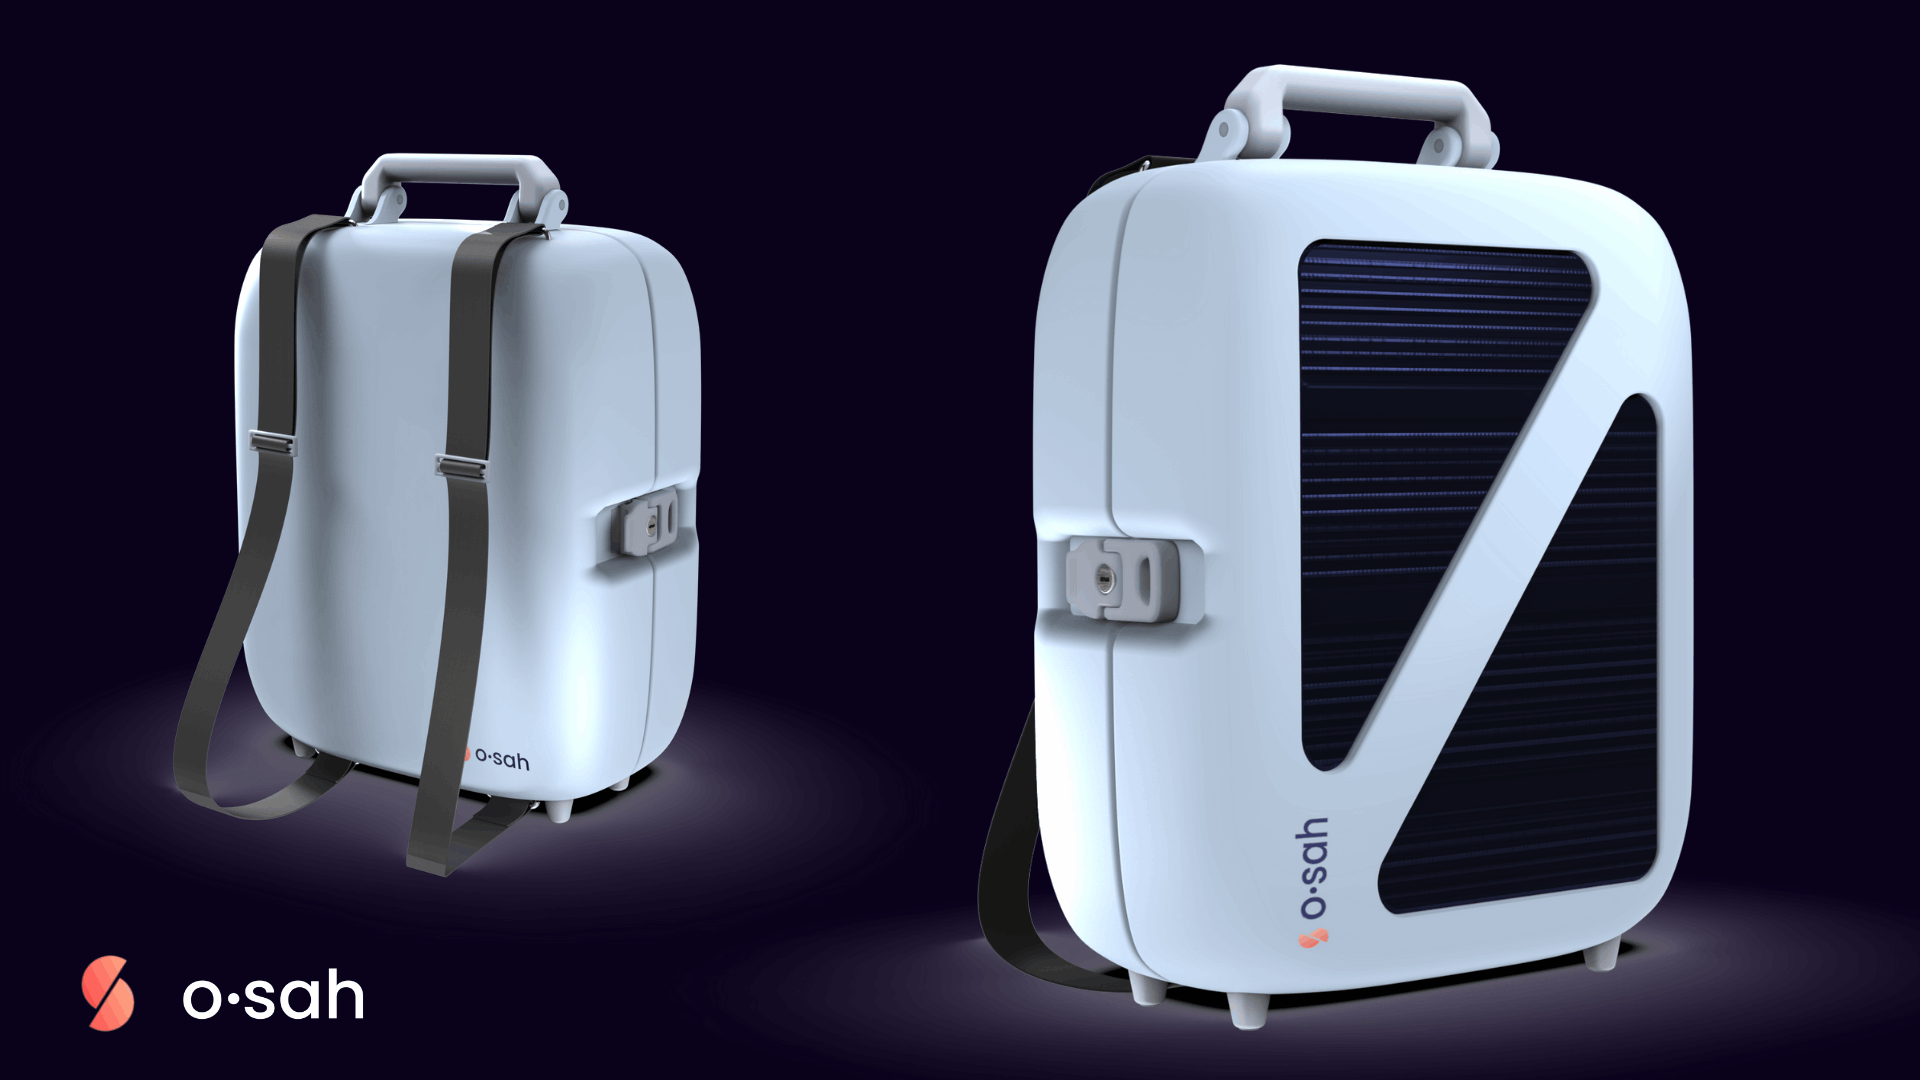 solar-powered, non-invasive, antenatal care kit